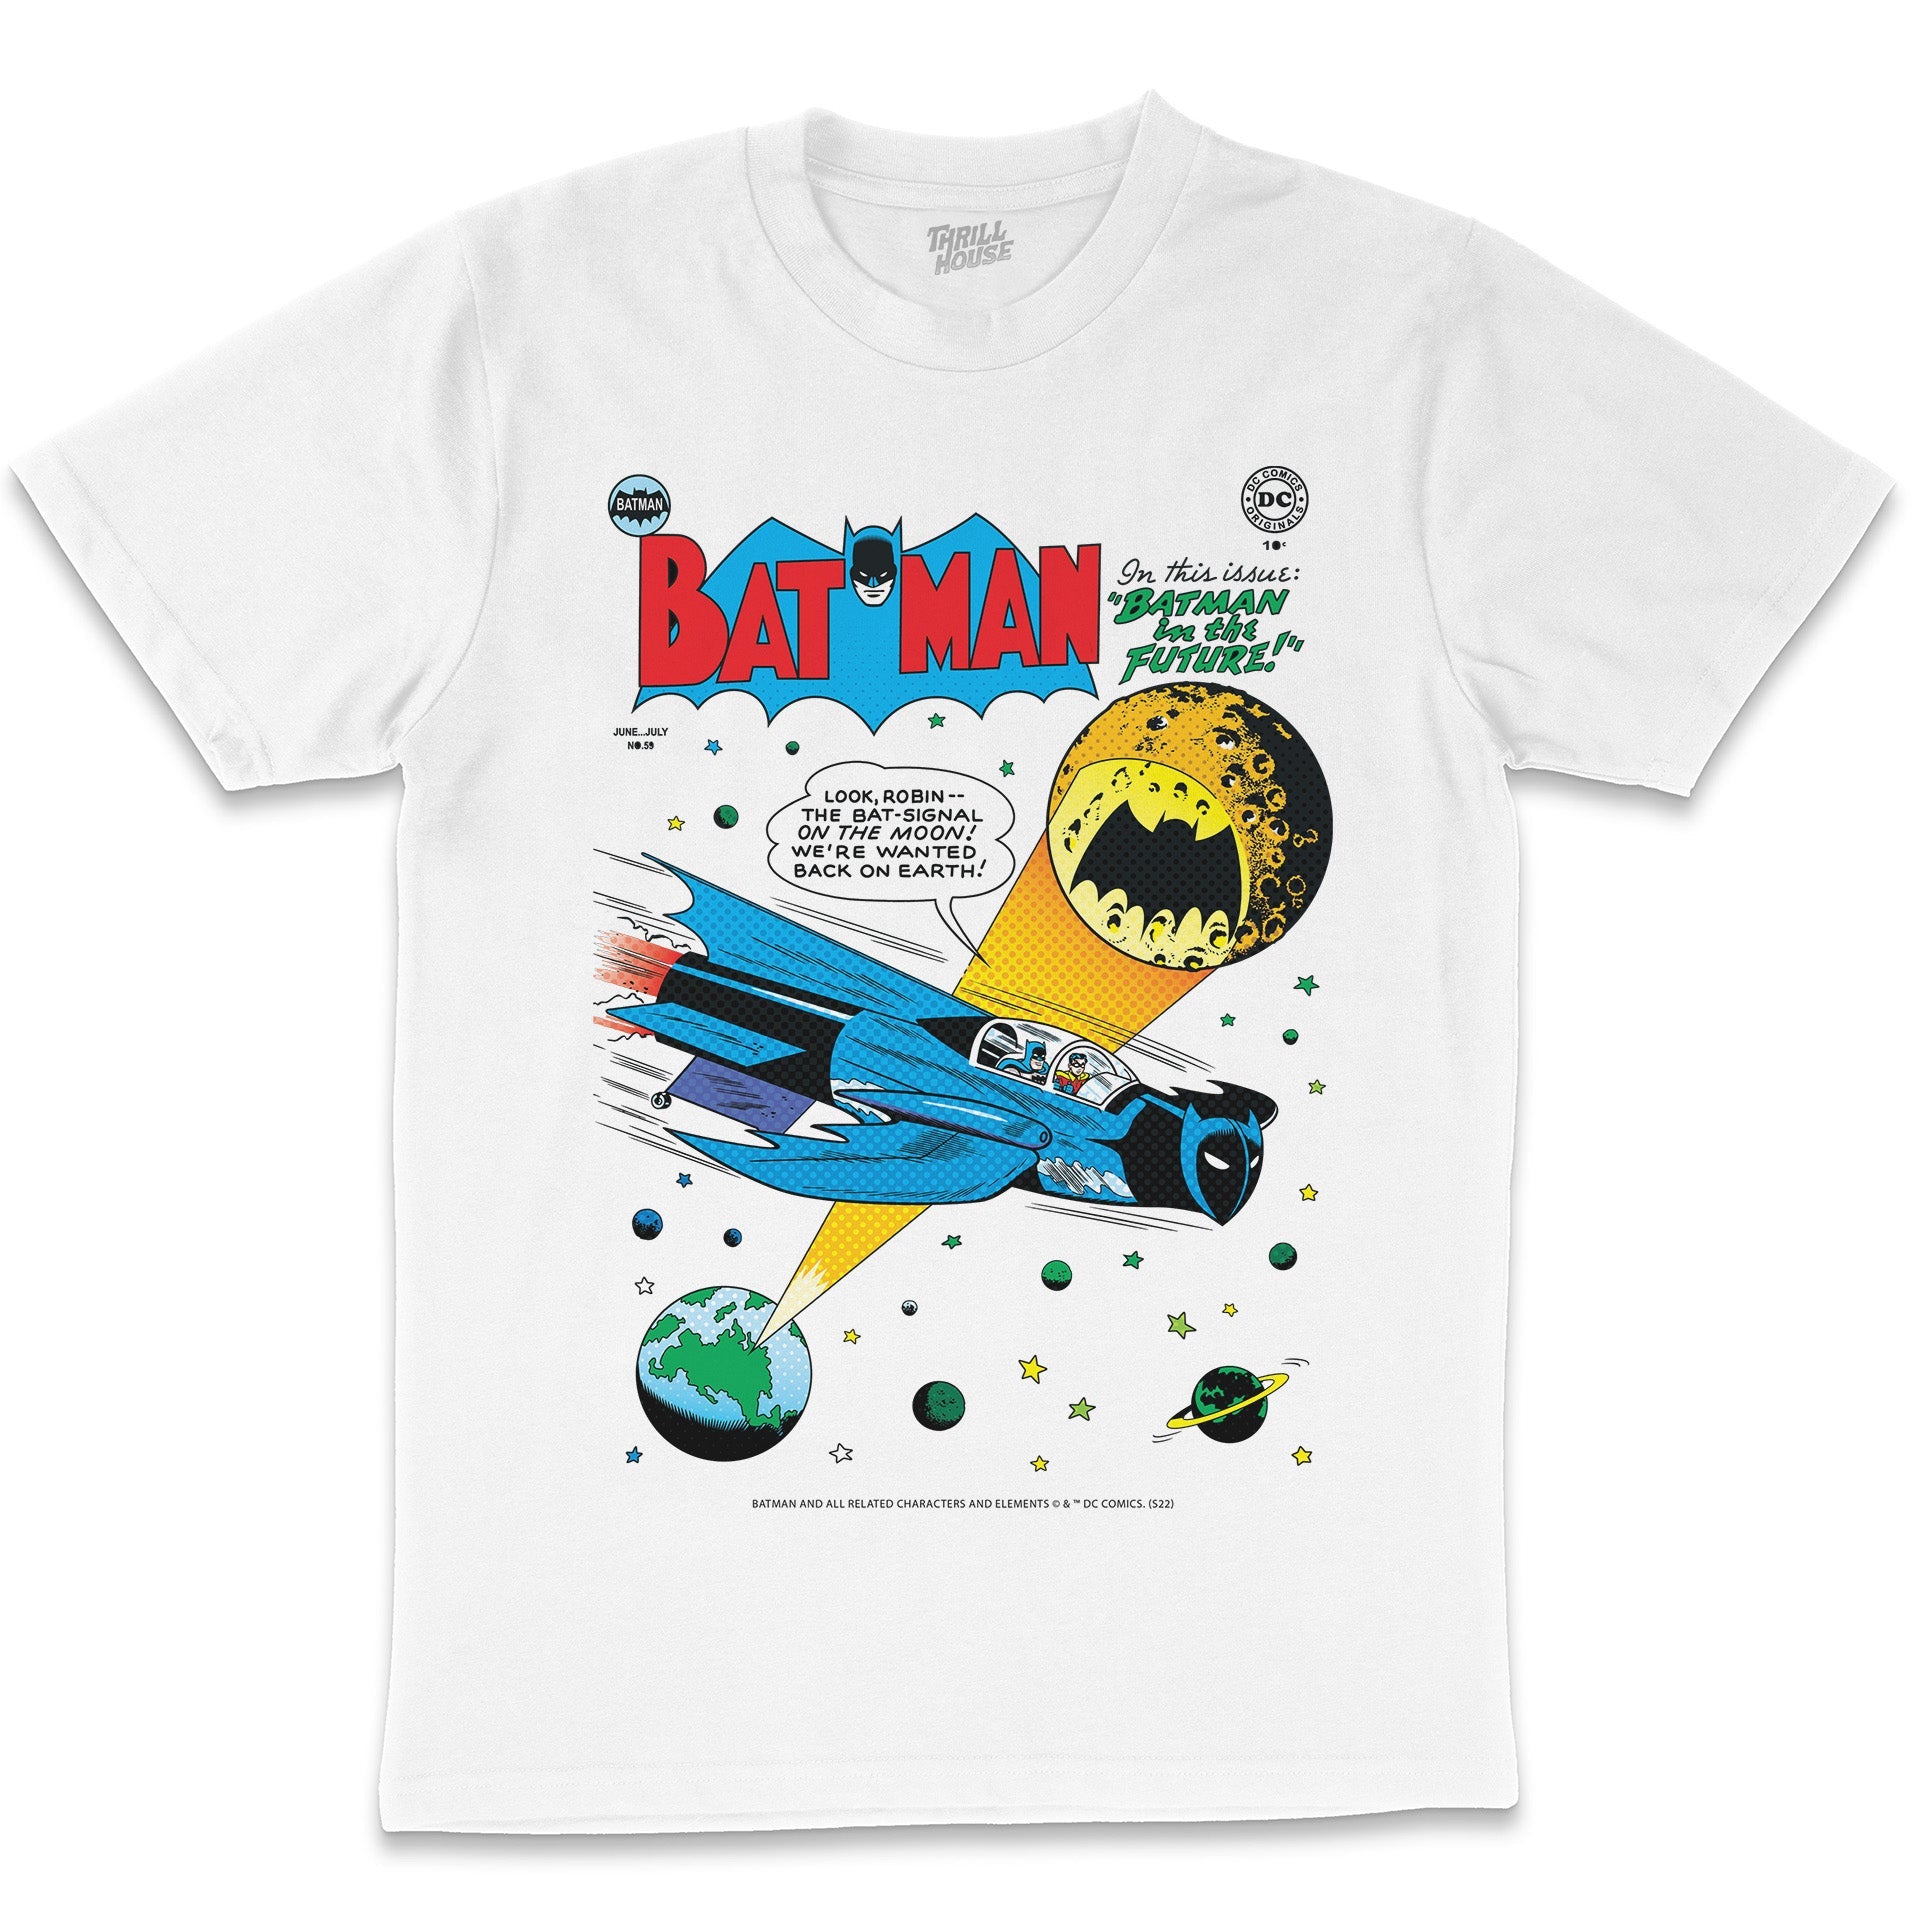 Batman Bat Signal Moon Dark Knight DC Comics Comic Book Superhero Villain Retro Vintage Batmobile Officially Licensed Cotton T-Shirt